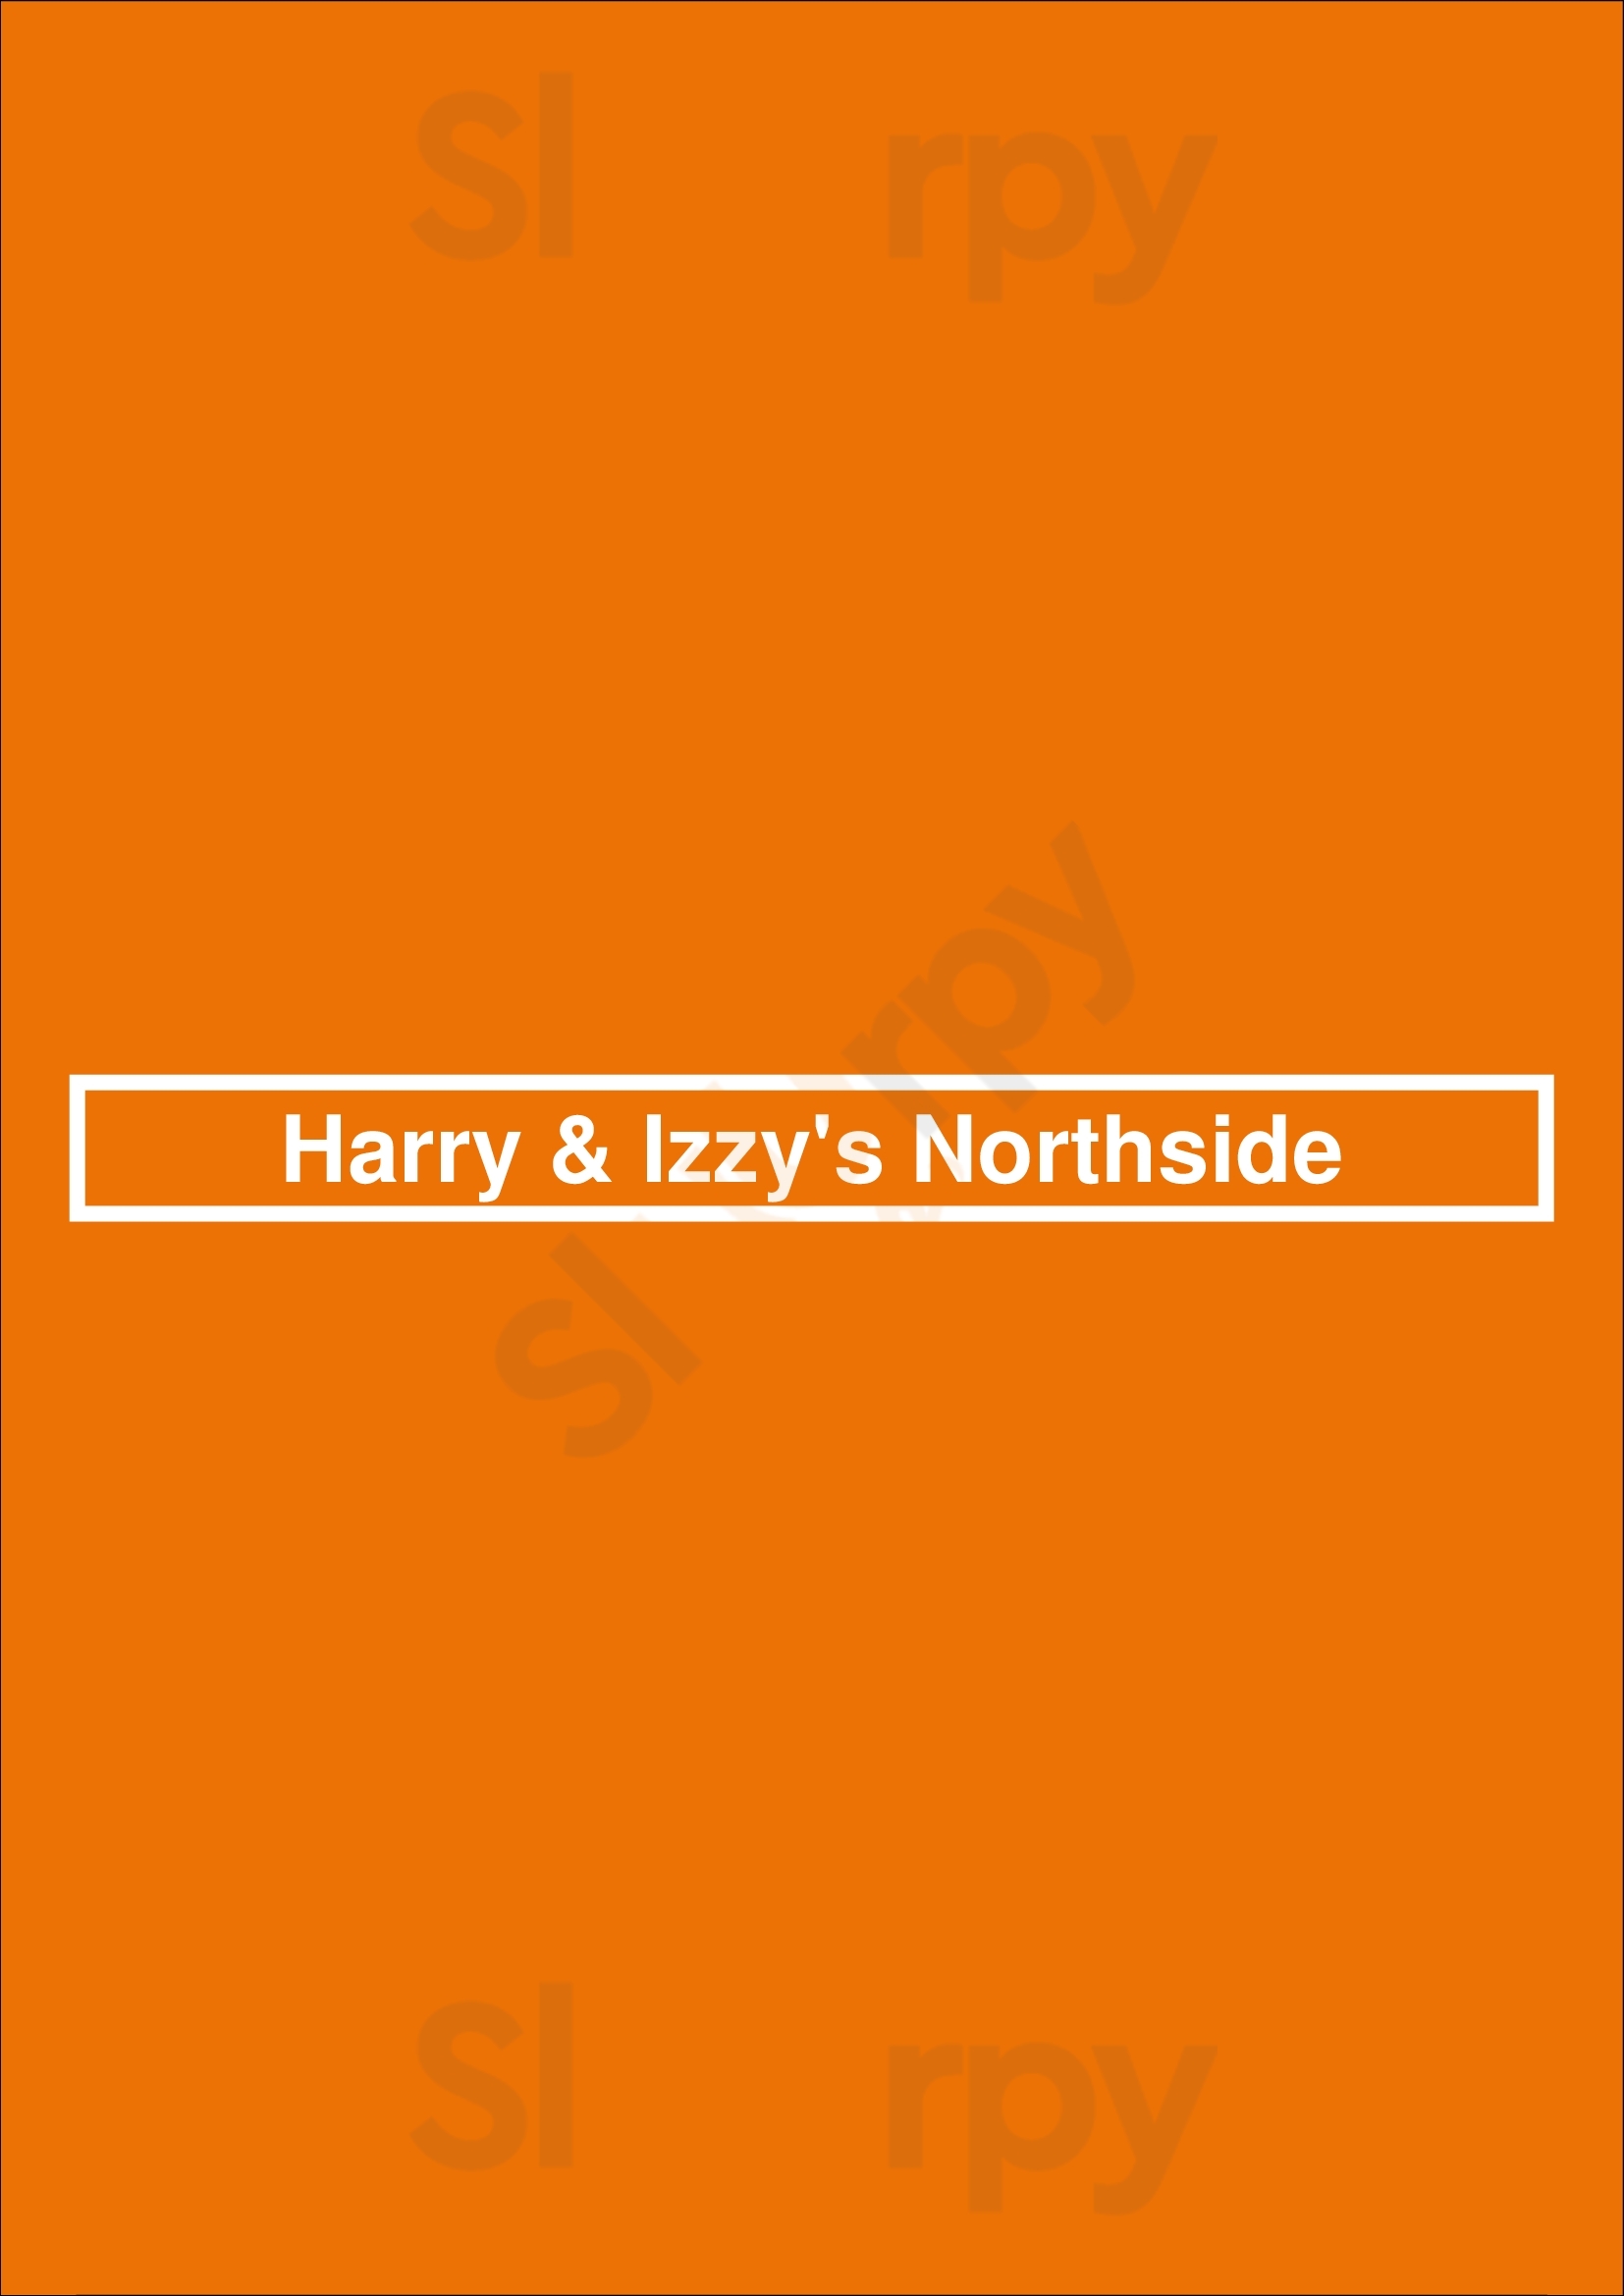 Harry & Izzy's Northside Indianapolis Menu - 1